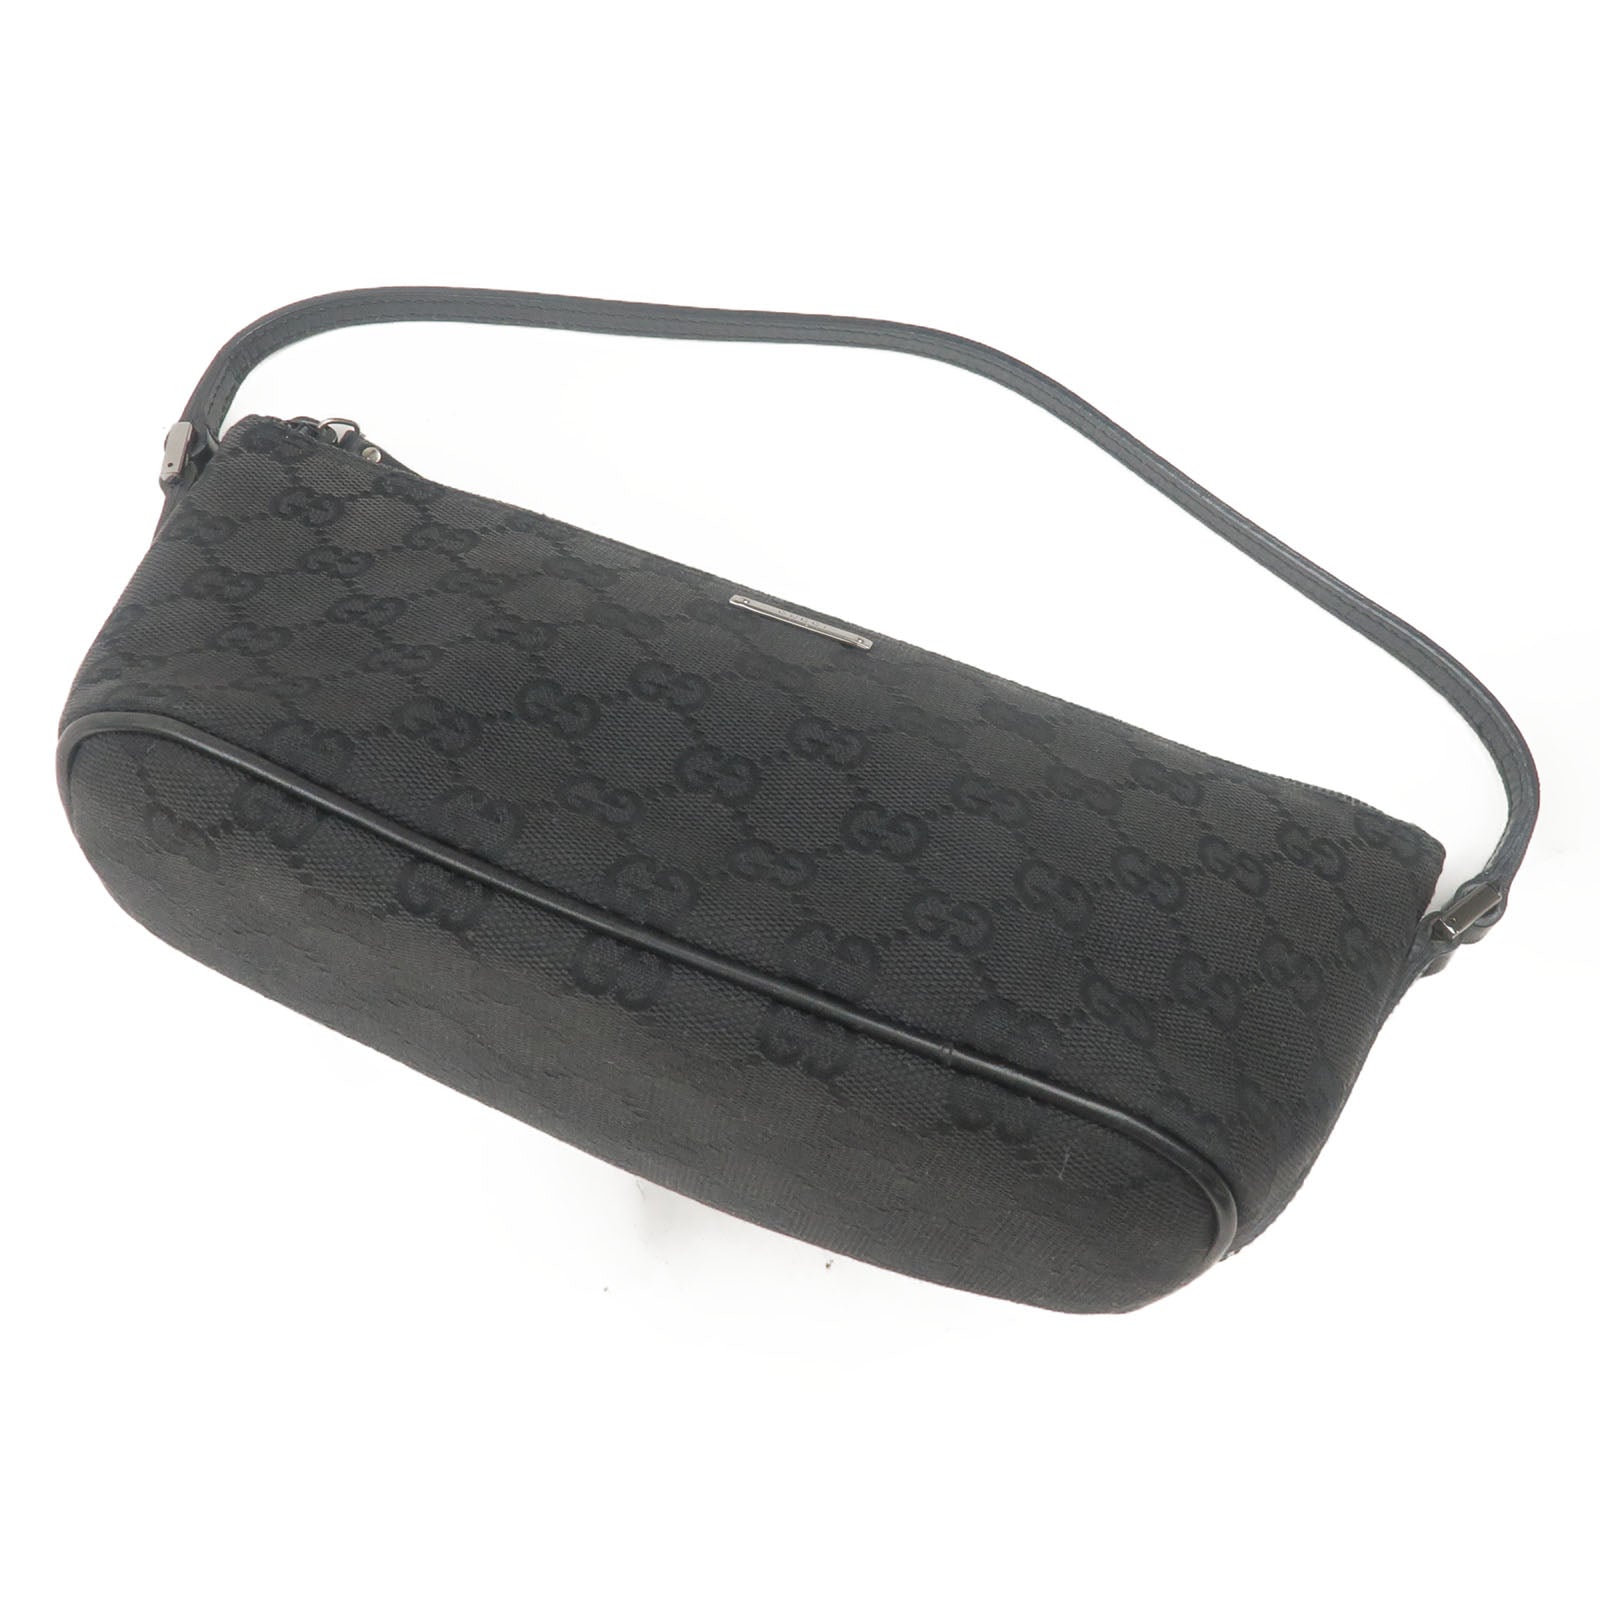 Hand - Black 07198 – dct Leather - GUCCI 'ZUMI' PUMPS Pouch - ep_vintage luxury Store - Purse - GUCCI - GG - Canvas - Bag